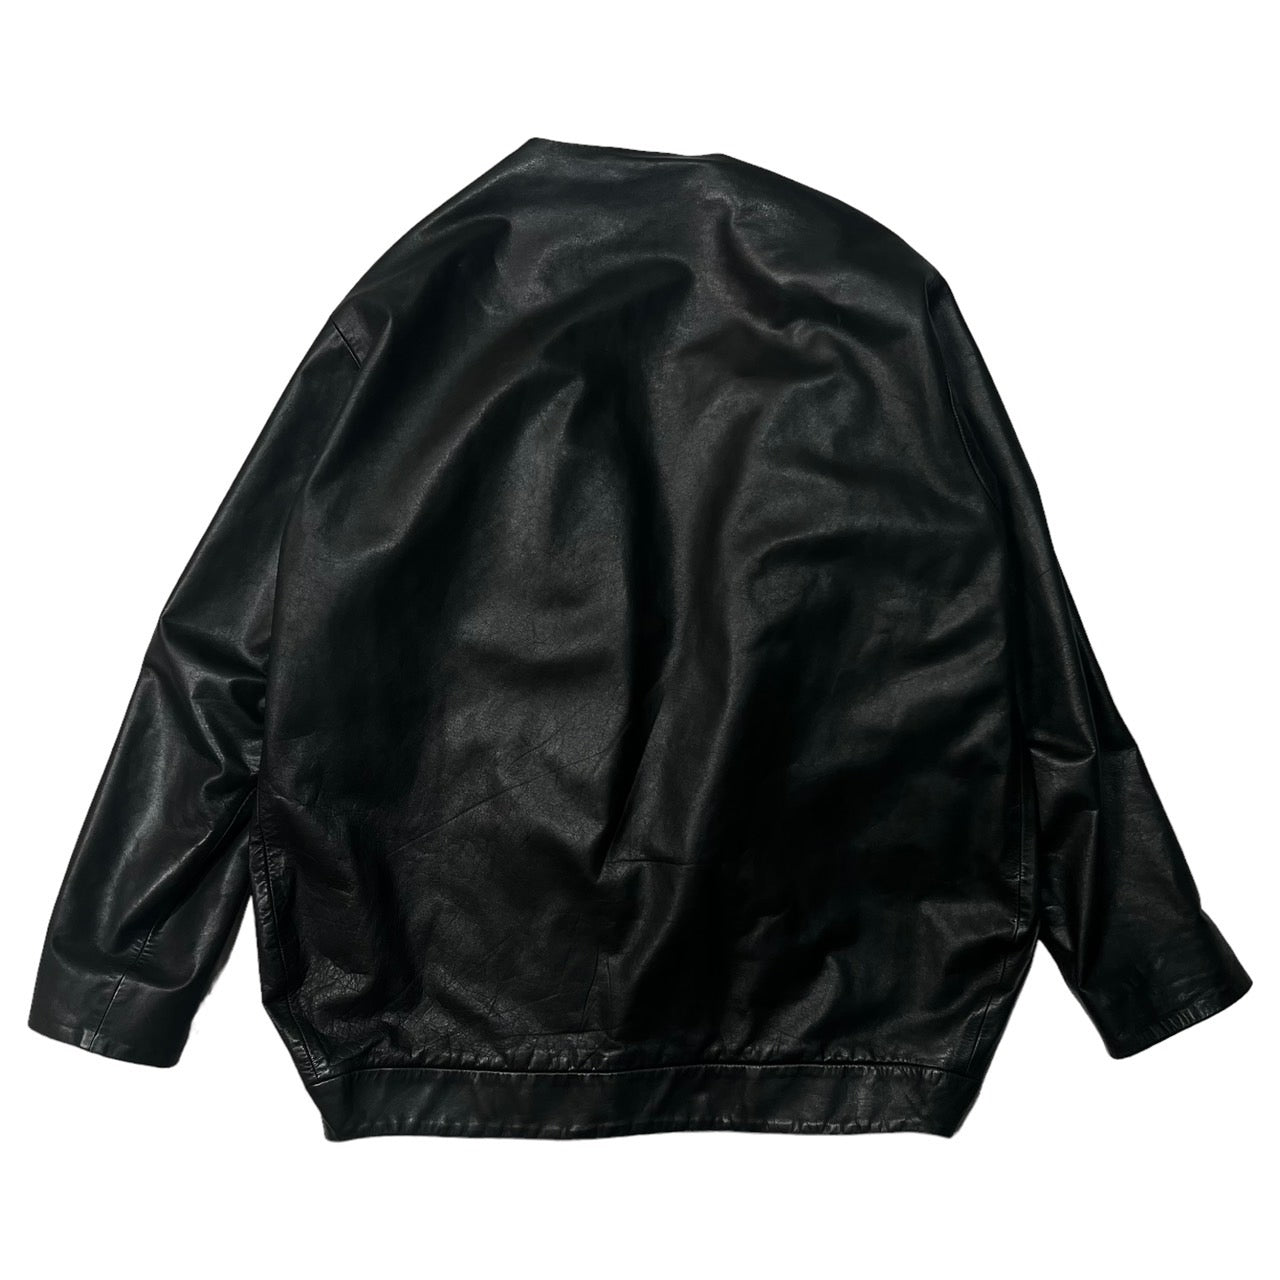 the Sakaki(ザサカキ) All leather stadium jacket remake haori jacket/オールレザースタジャン リメイク 羽織 ジャケット SIZE M ブラック  廃版ブランド 羽織リメイク 1点モノ稀少品